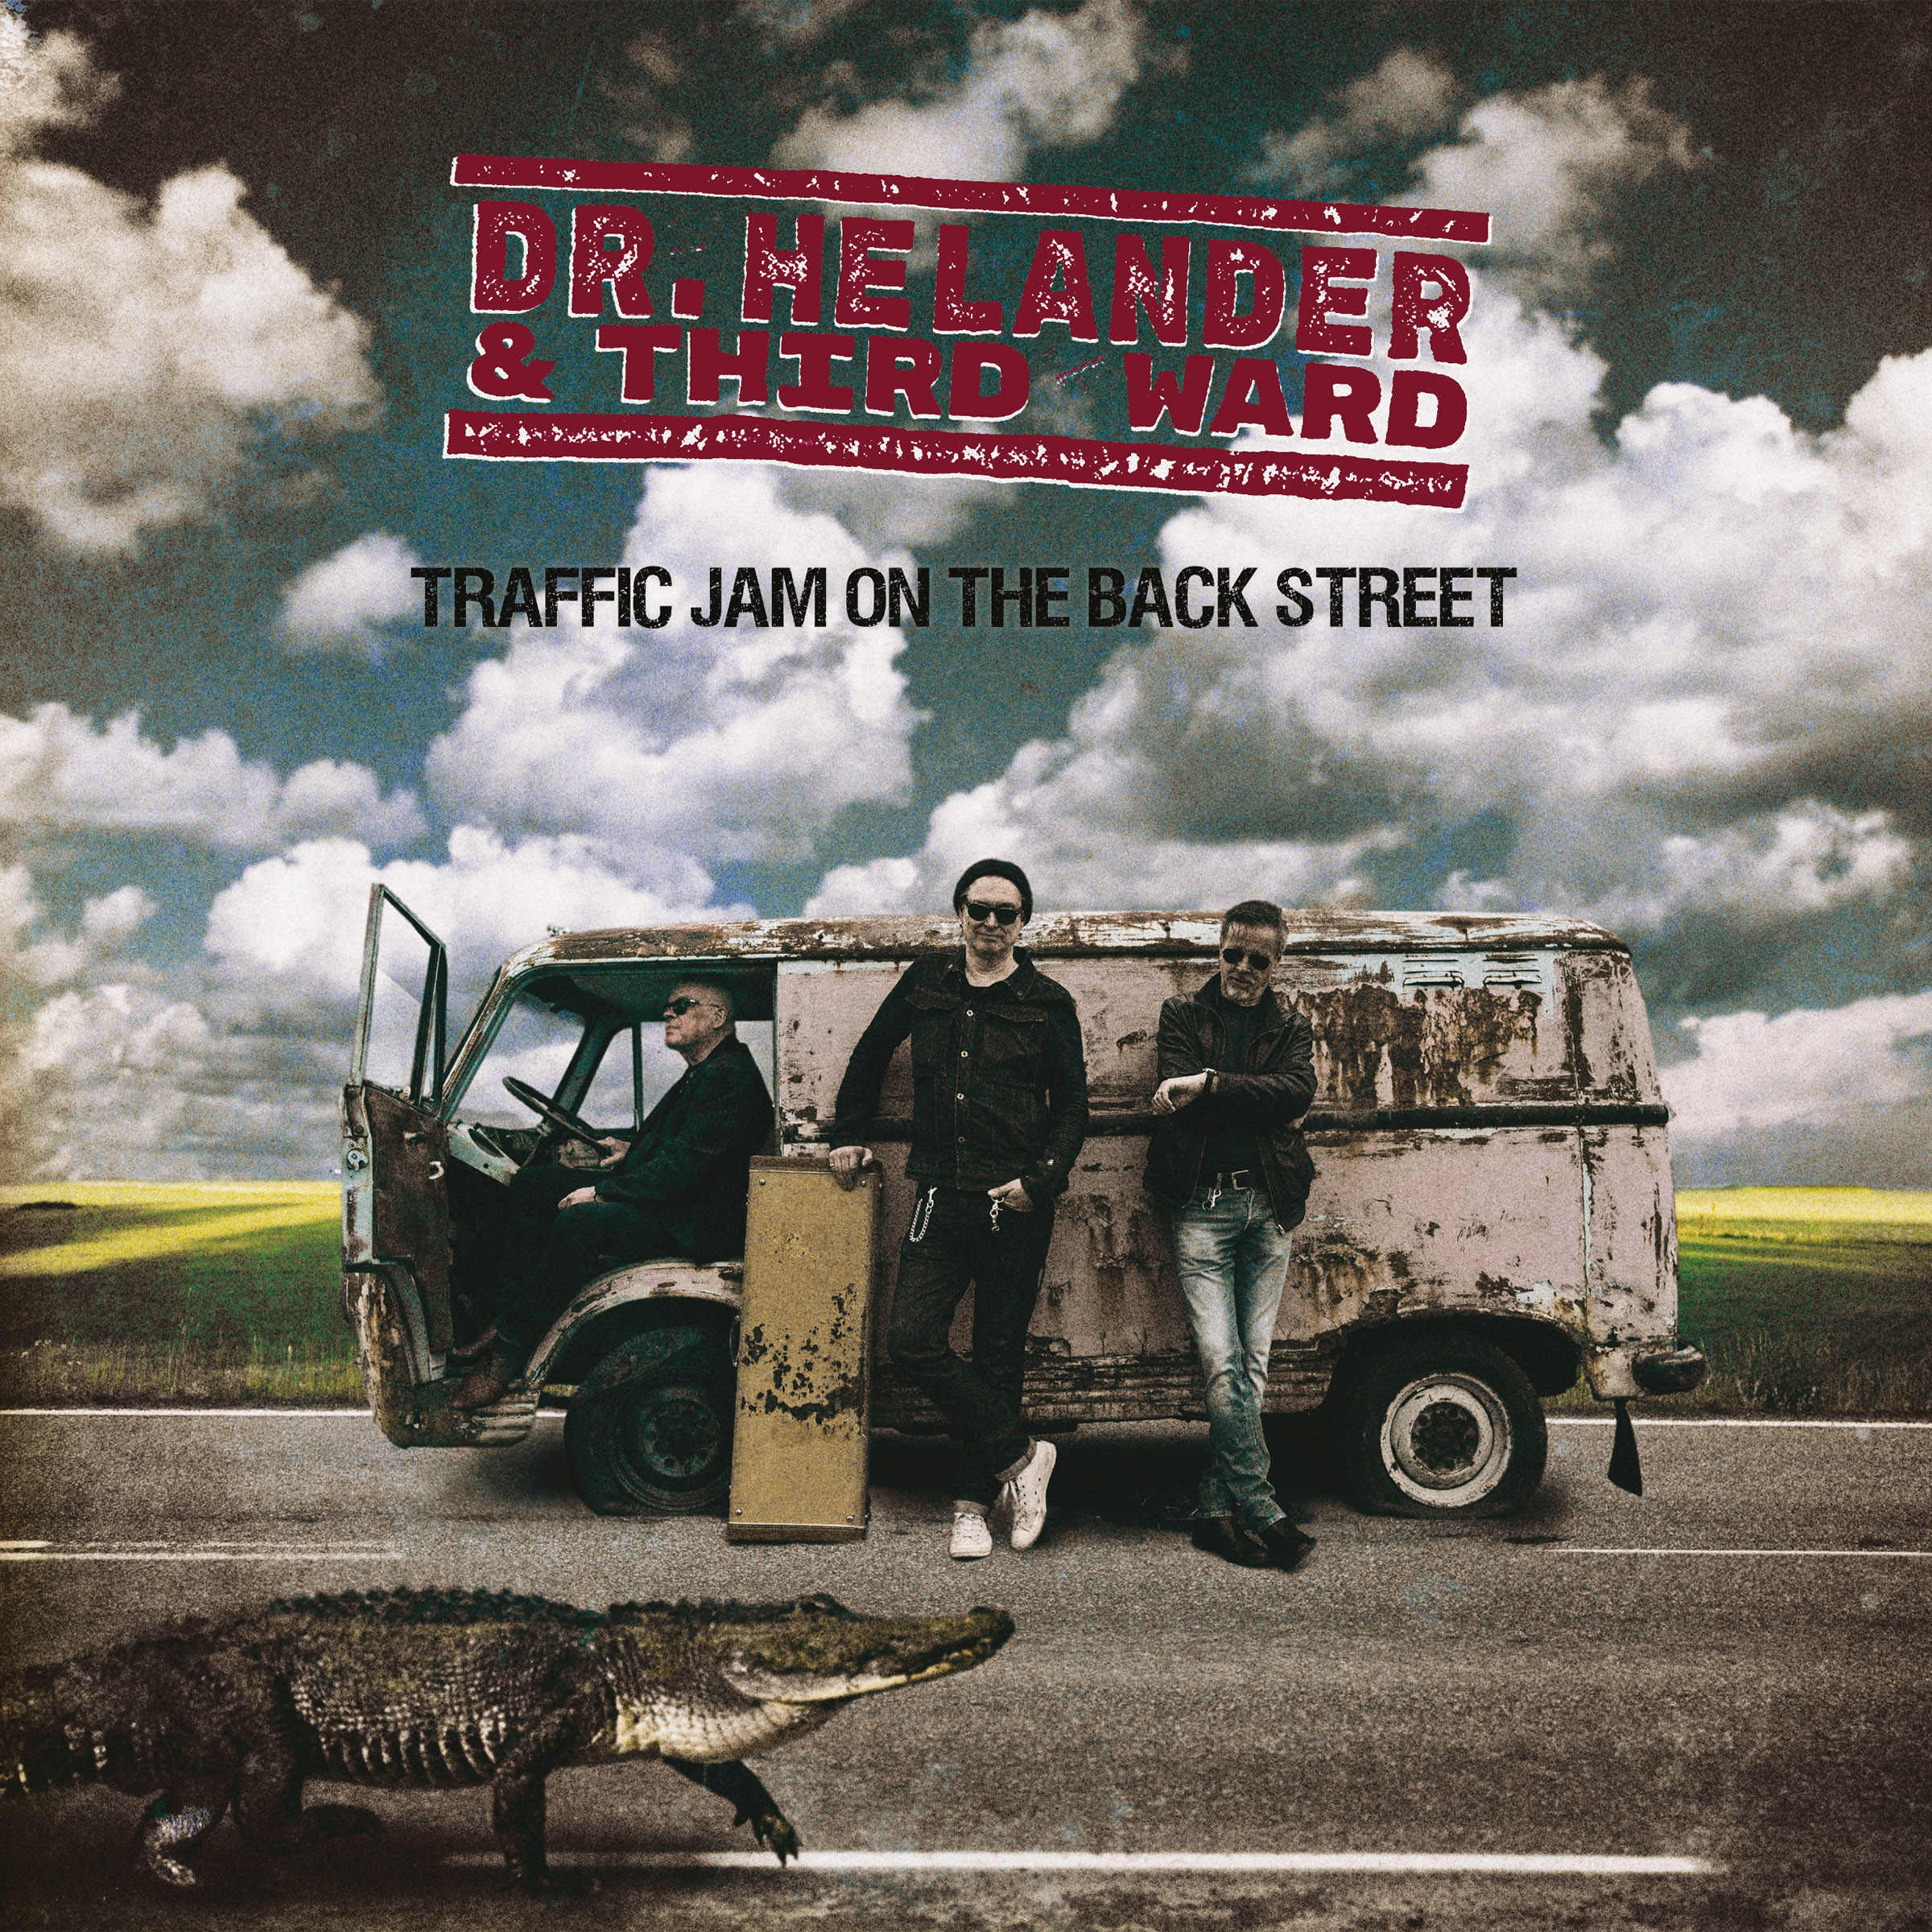 Dr. Helander & Third Ward - Traffic Jam on the Back Street - CD